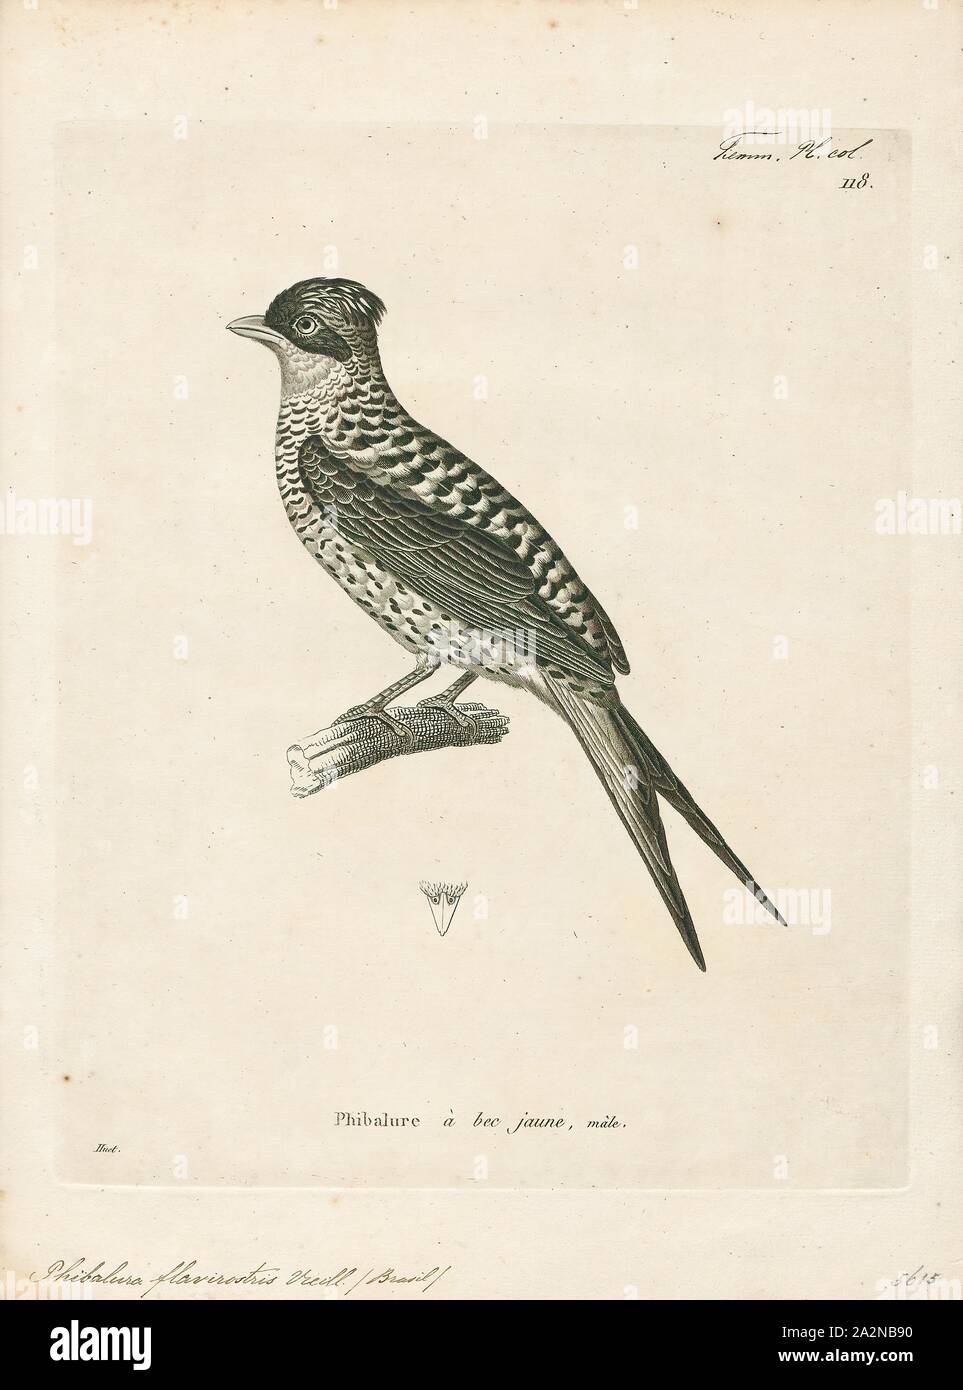 Phibalura flavirostris, Print, The swallow-tailed cotinga (Phibalura flavirostris) is a species of passerine bird in the family Cotingidae. It is the only member of the genus Phibalura., 1700-1880 Stock Photo